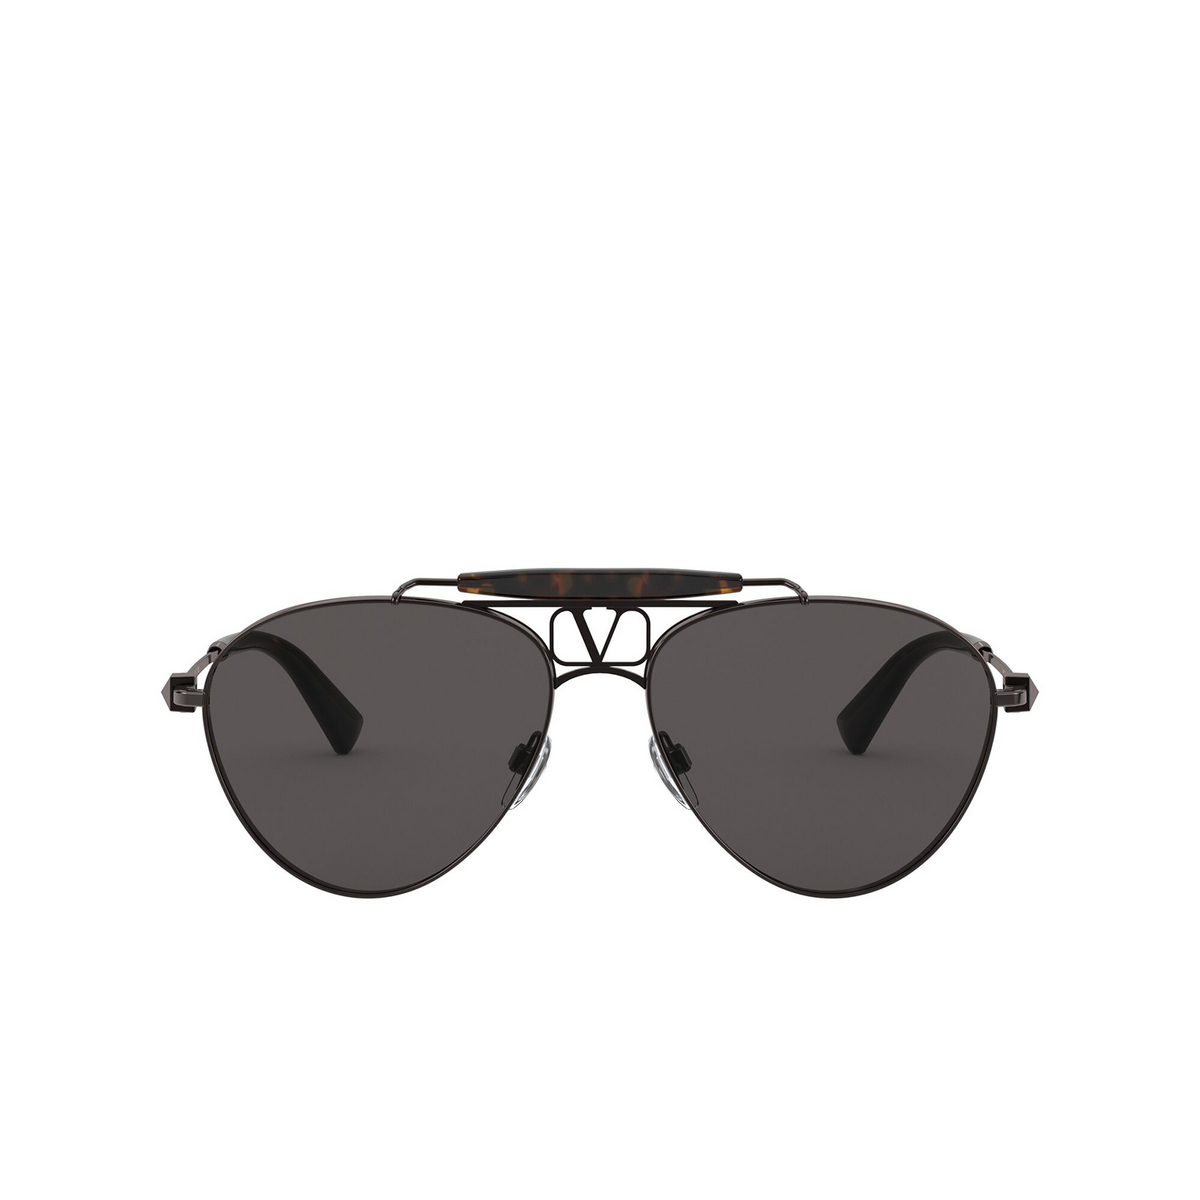 Valentino® Aviator Sunglasses: VA2039 color Rutenium 303987 - front view.